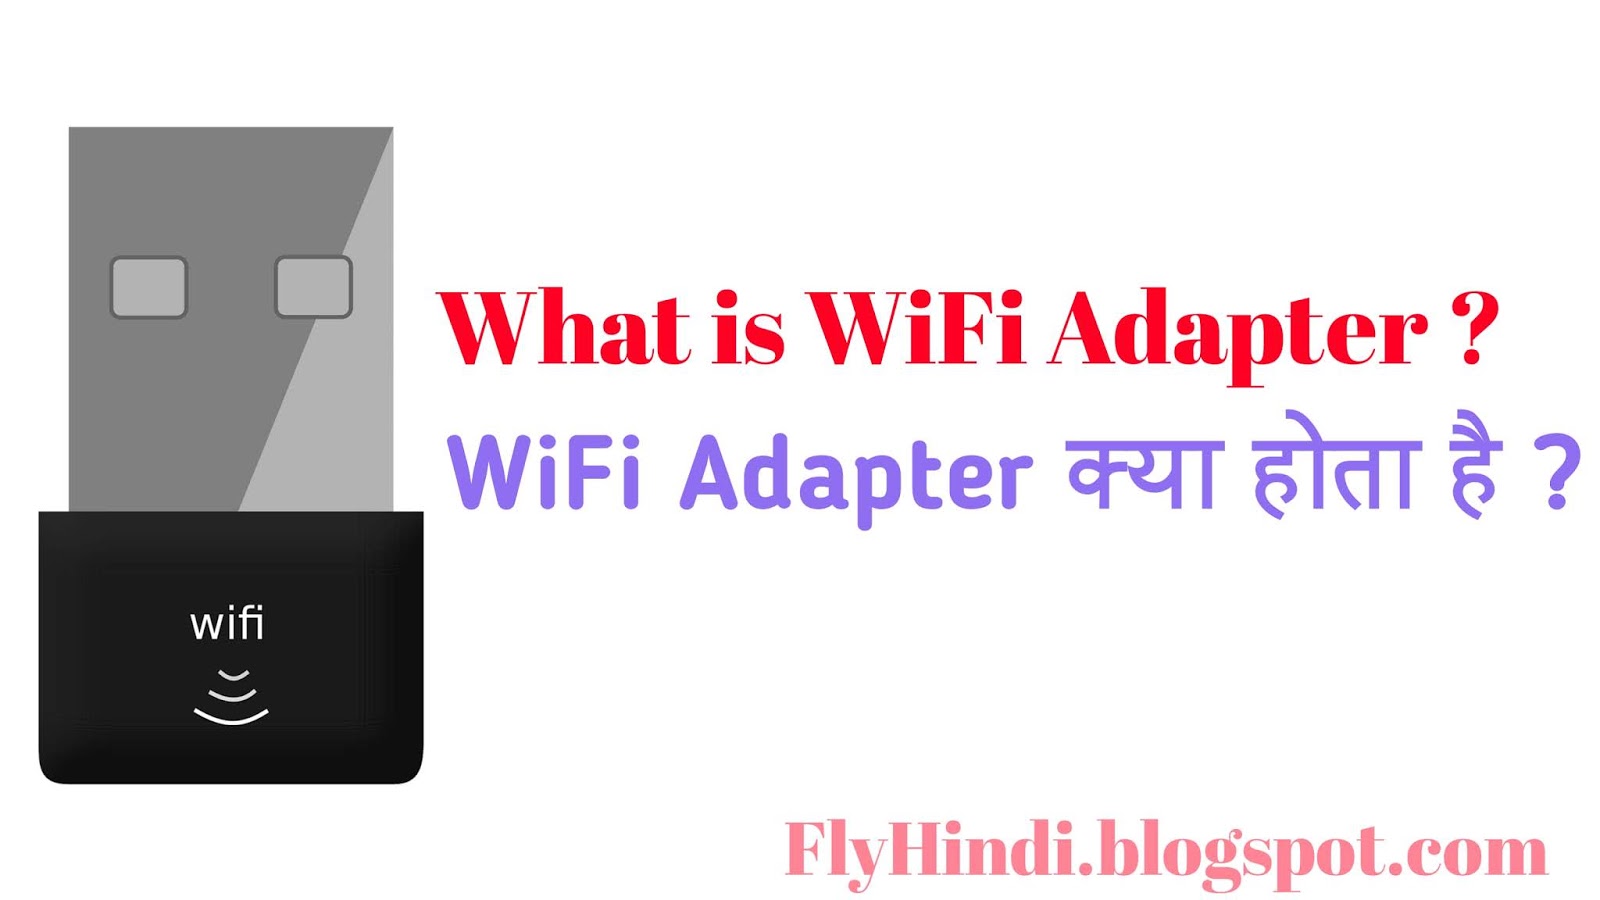 Wifi Adapter kya hota hai ? What is Wifi Adapter in Hindi